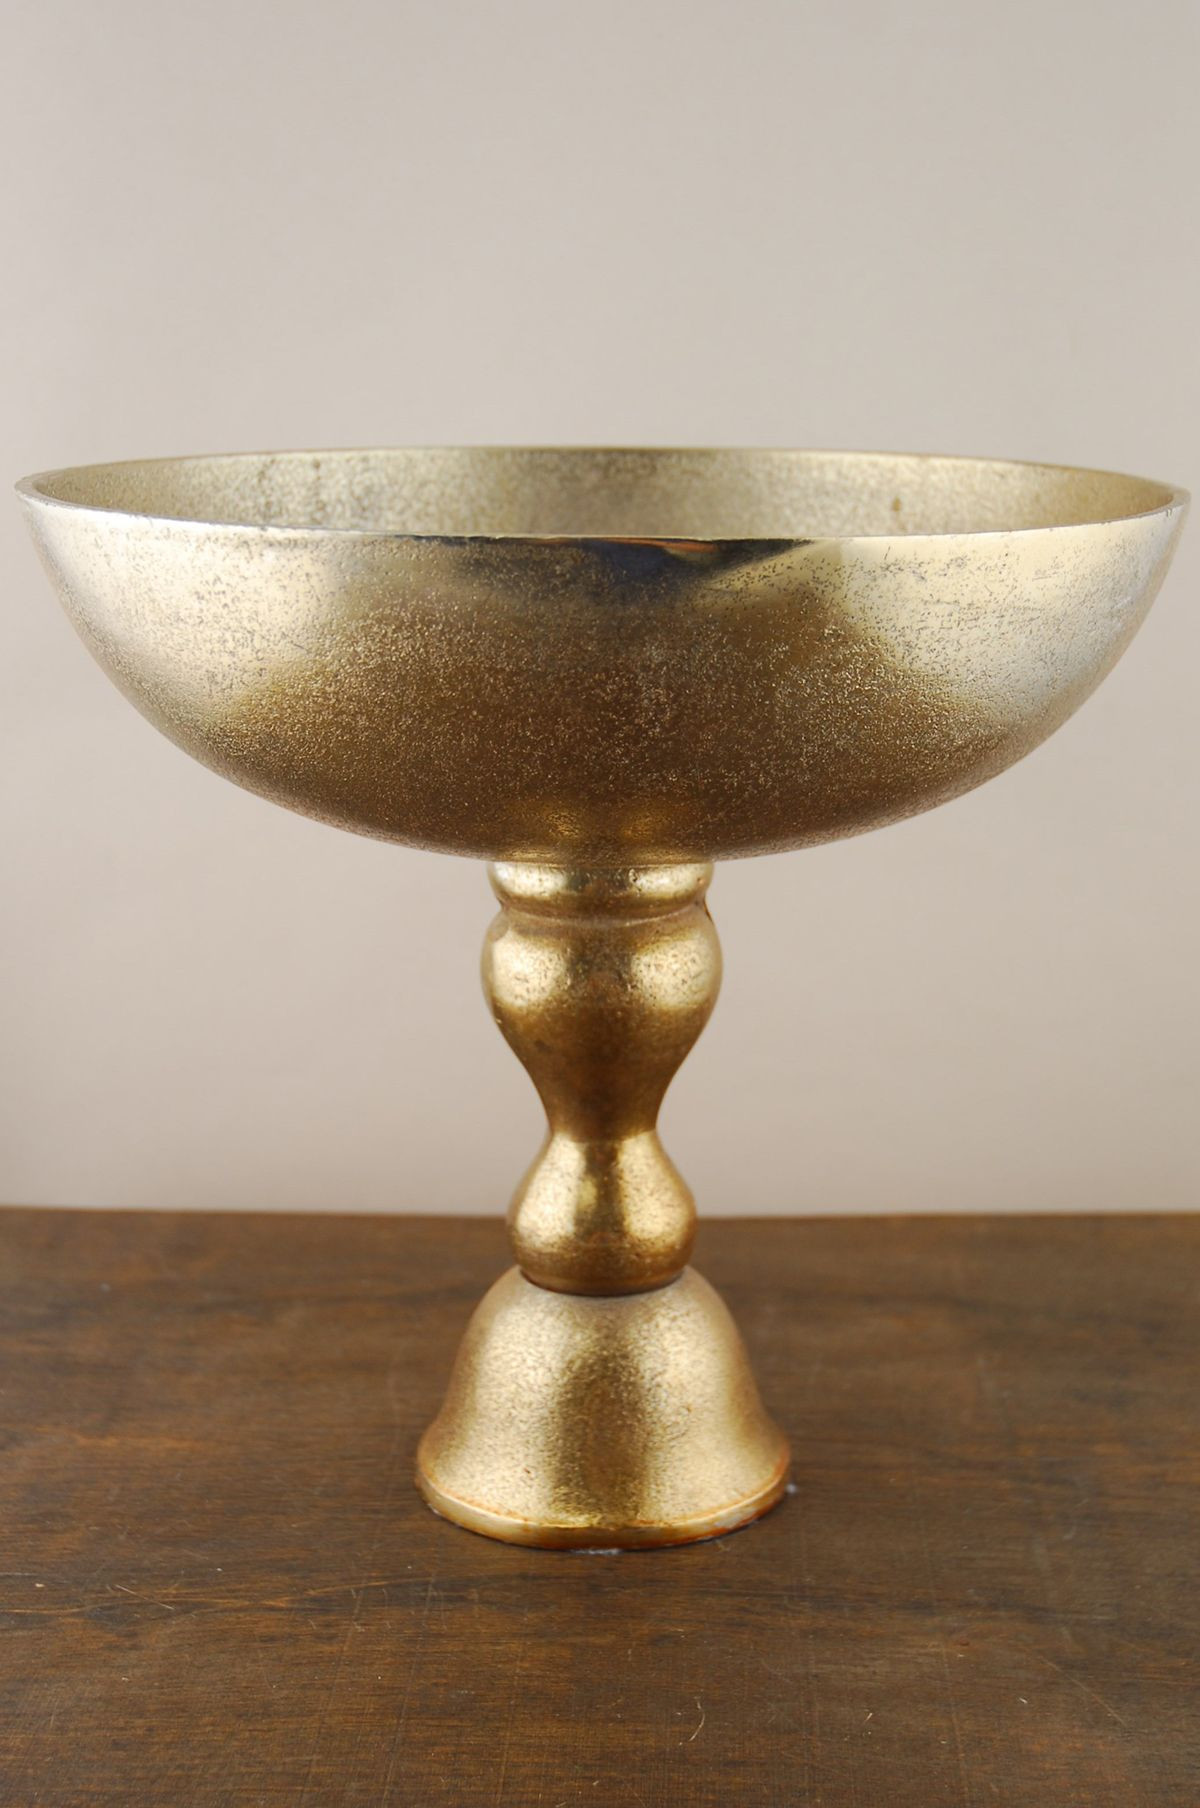 Rose Gold Pedestal Vase Of Gold Dorado Pedestal Bowl 12in X 11in Wishlist Pinterest Bowls Inside Metal Dorado Bowl 12in X 11in